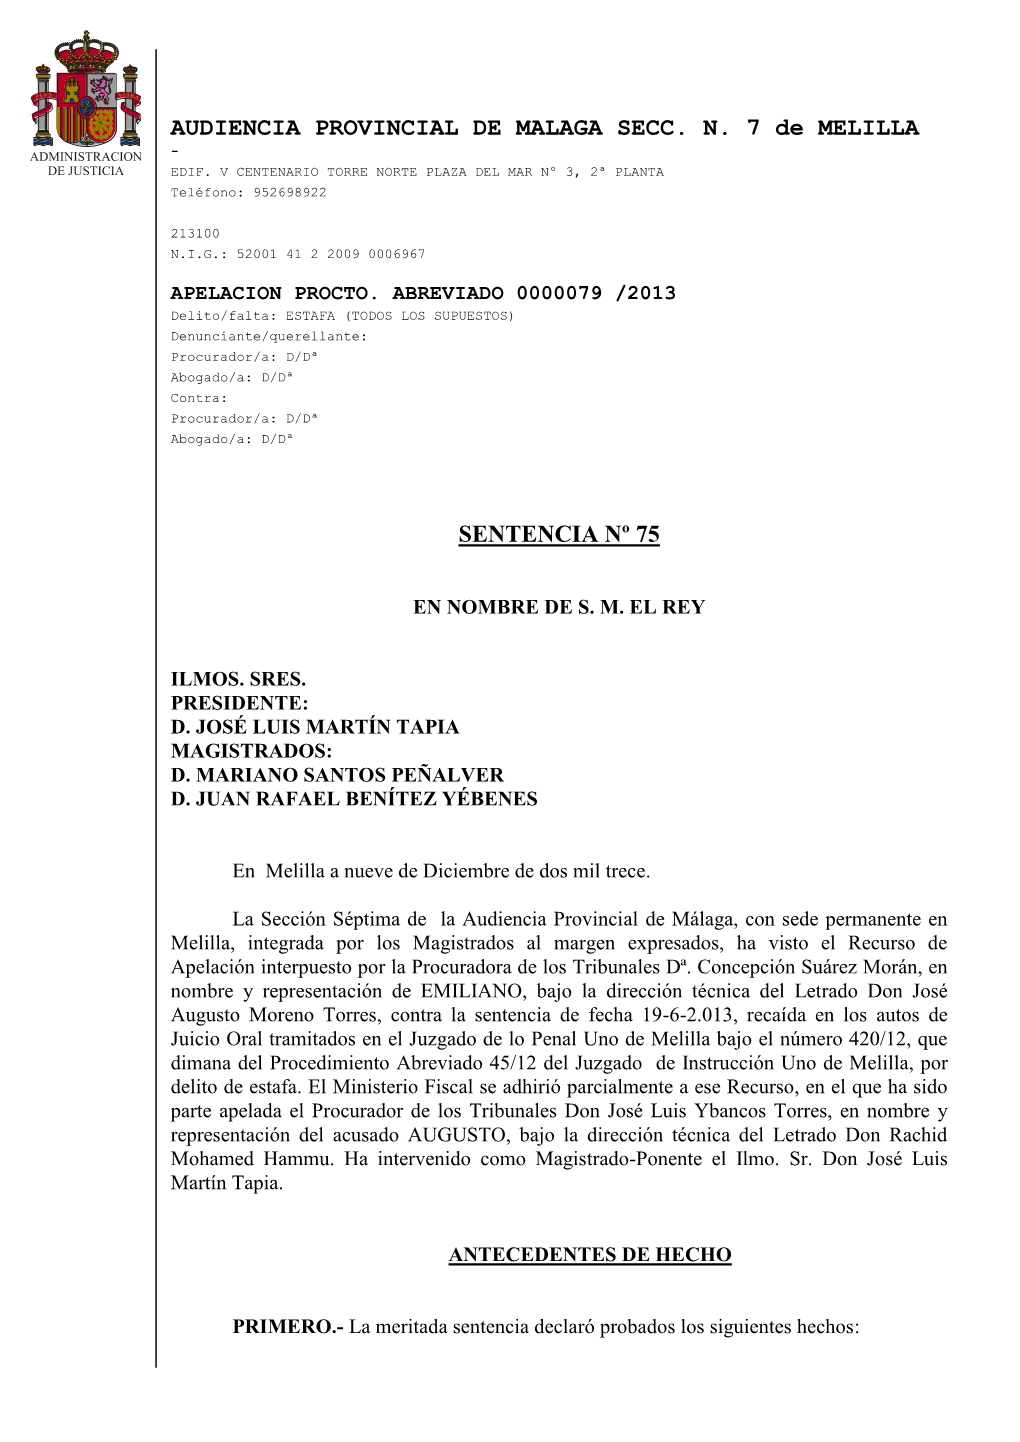 AUDIENCIA PROVINCIAL DE MALAGA SECC. N. 7 De MELILLA - EDIF